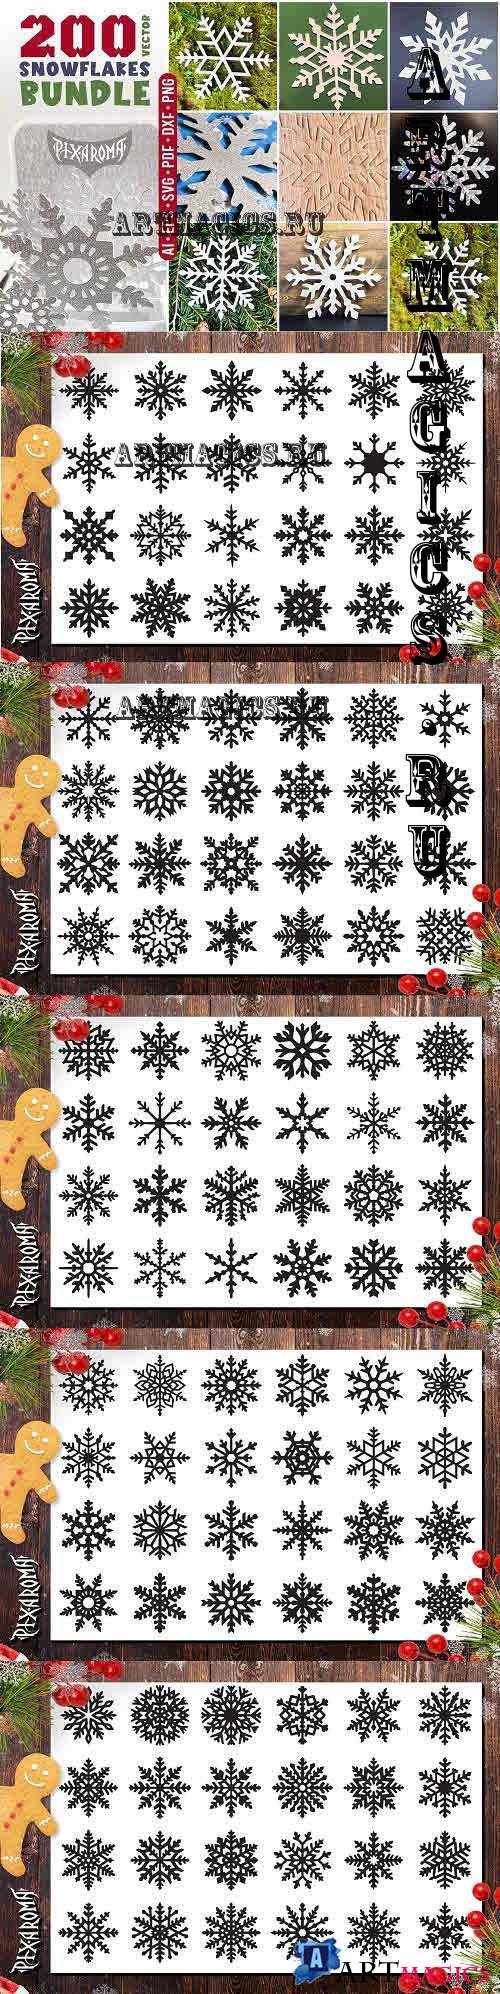 200 Snowflakes Bundle | Cut Files - 10850591